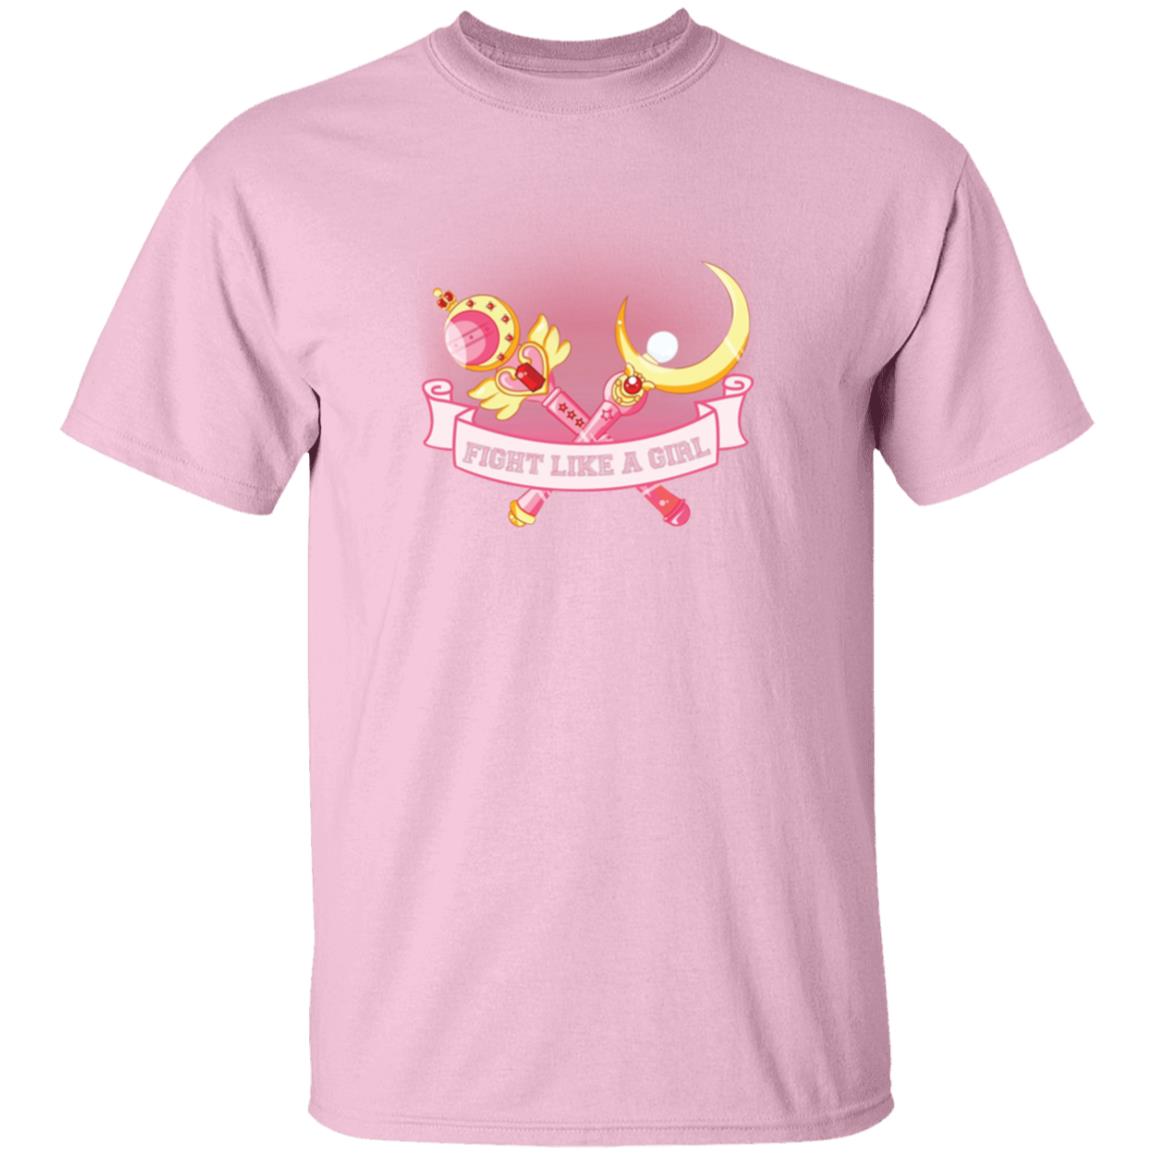 Sailor Moon – Fight like a girl T Shirt